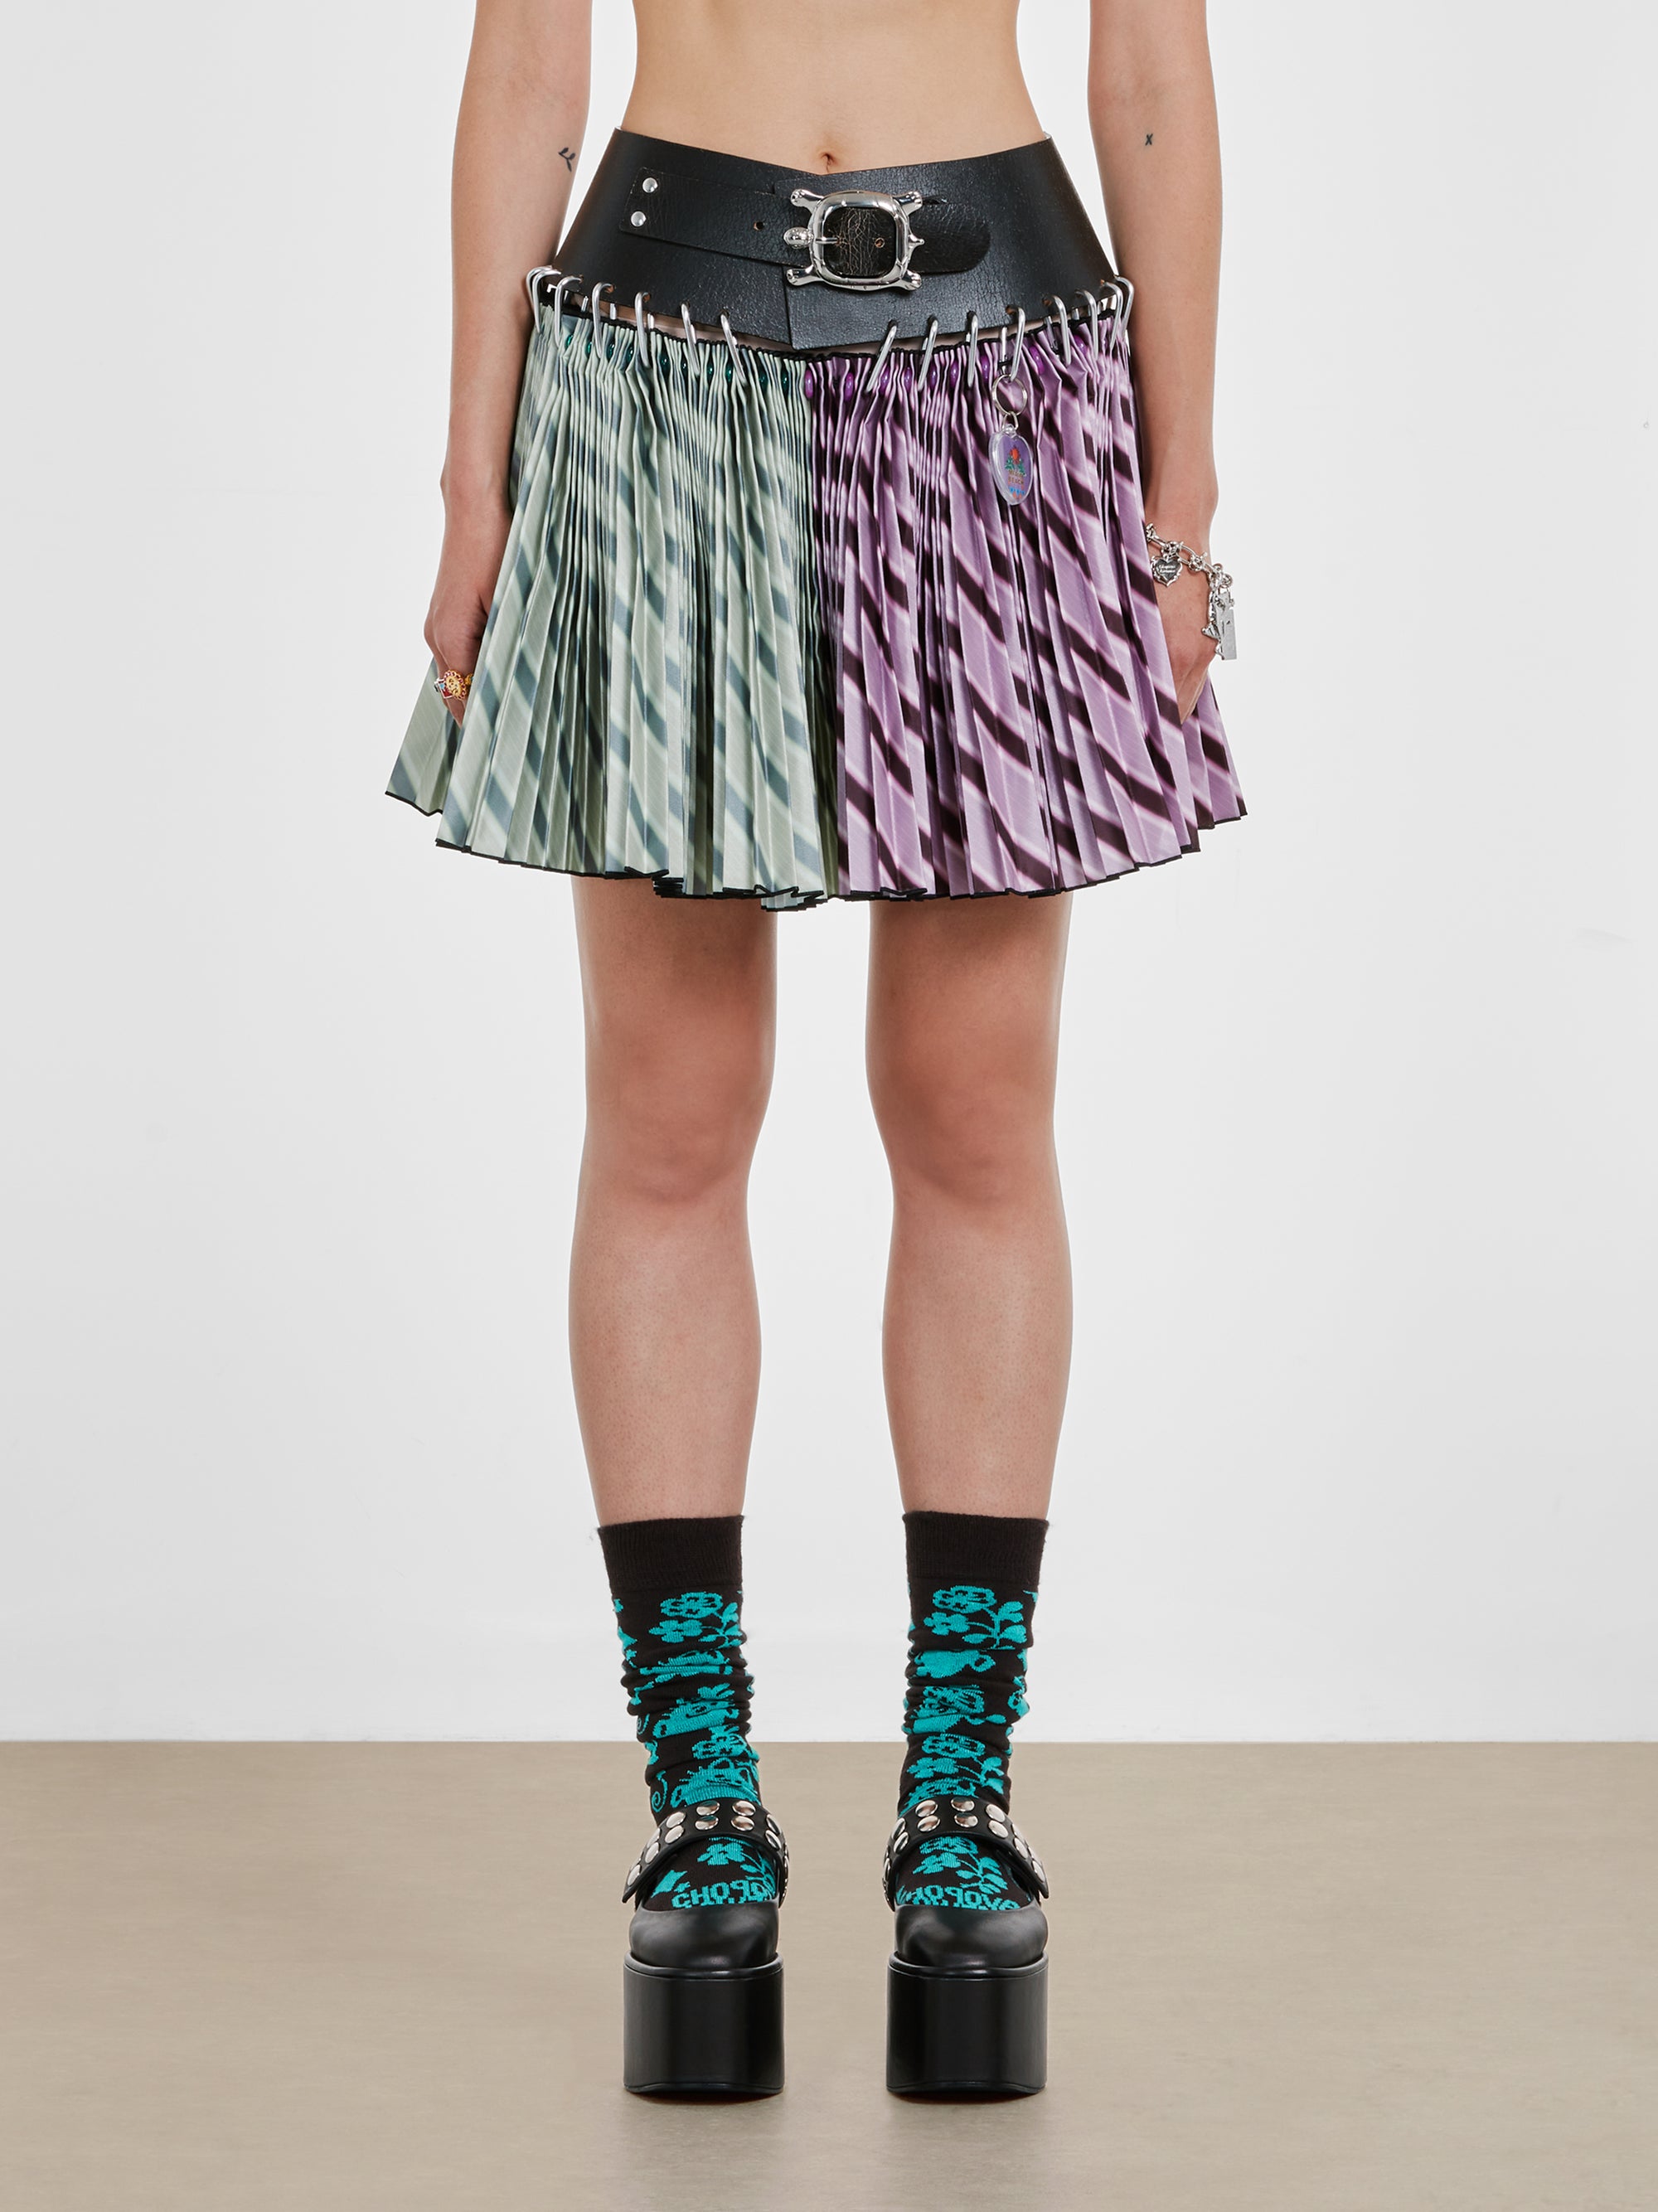 Chopova Lowena - Women’s Chamonix Mini Carabiner Skirt - (Mix Stripe) view 1